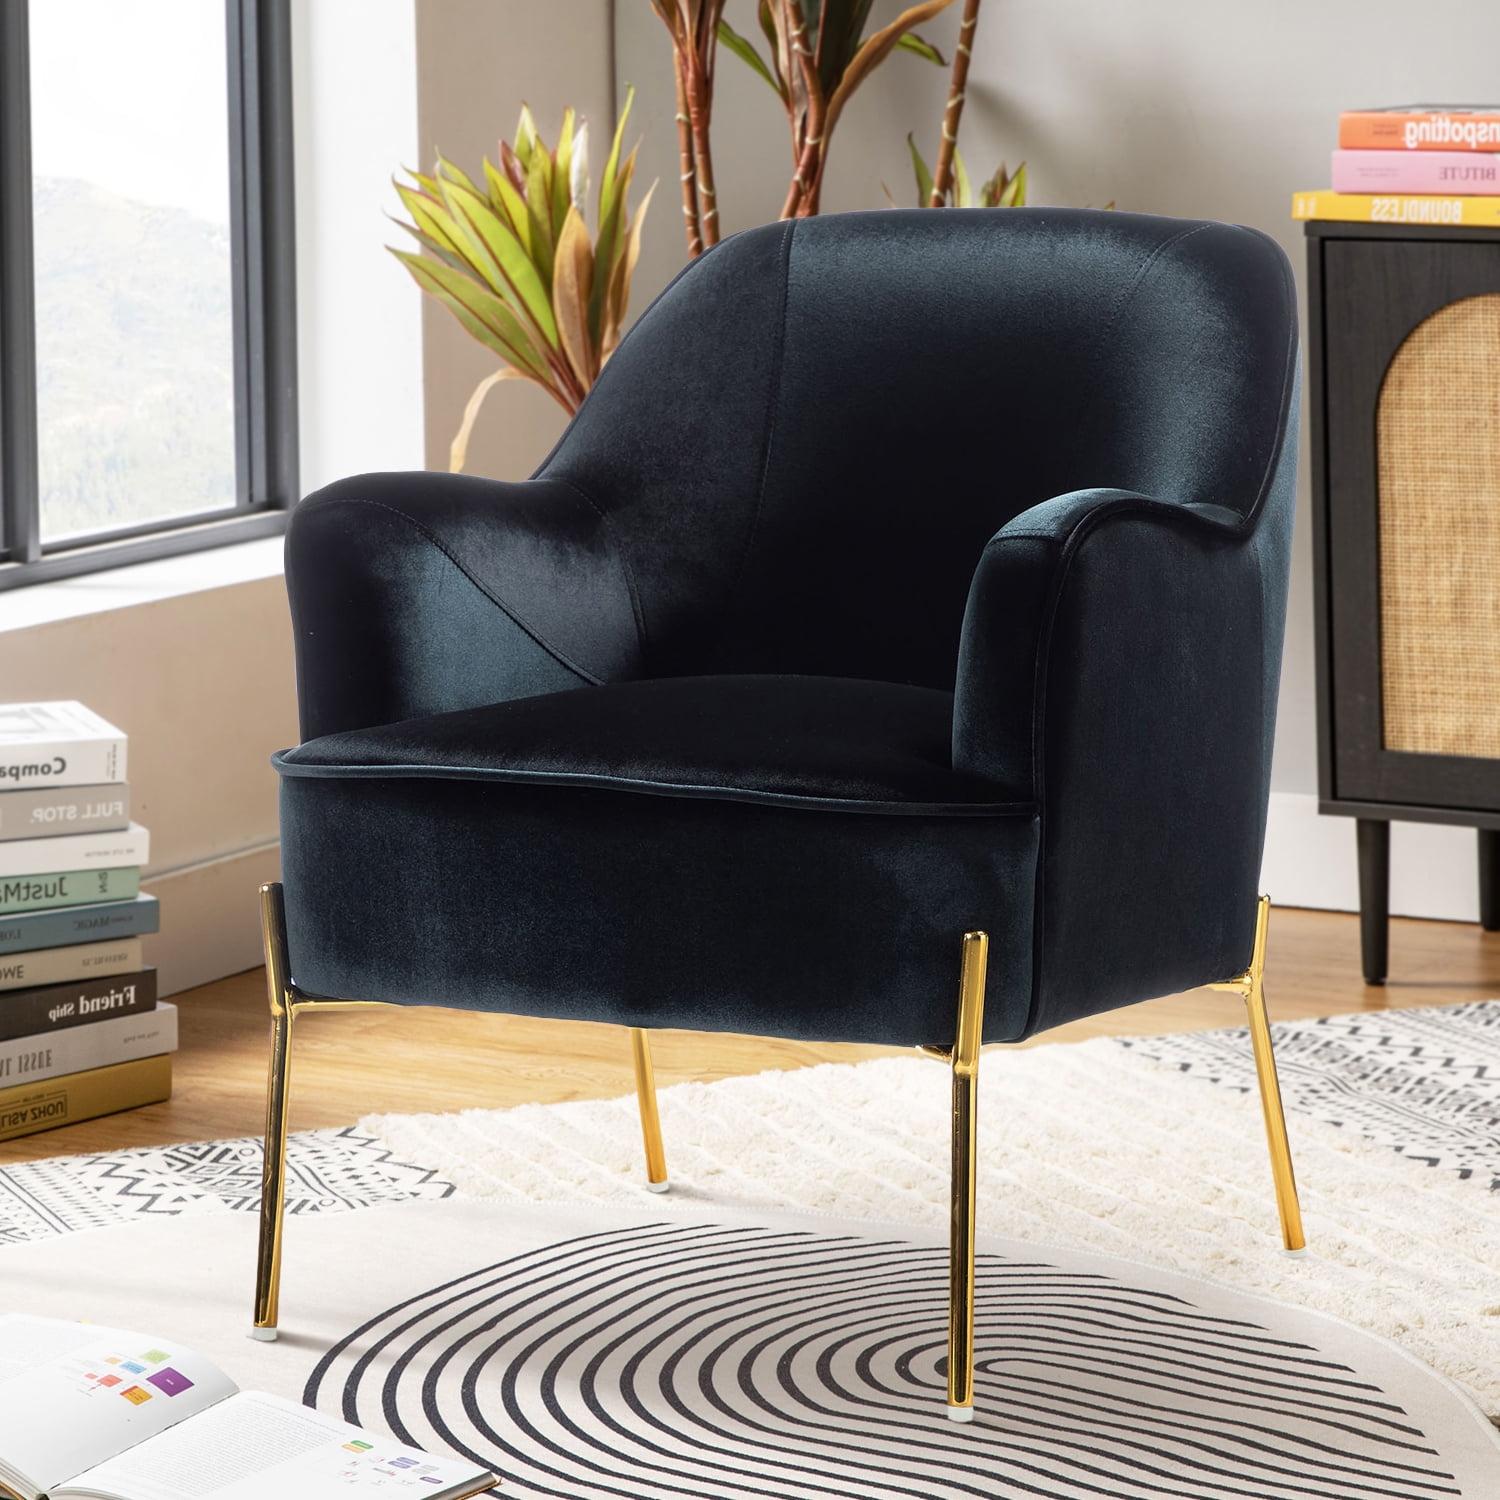 Elegant Black Velvet Curved Backrest Accent Chair with Golden Metal Legs